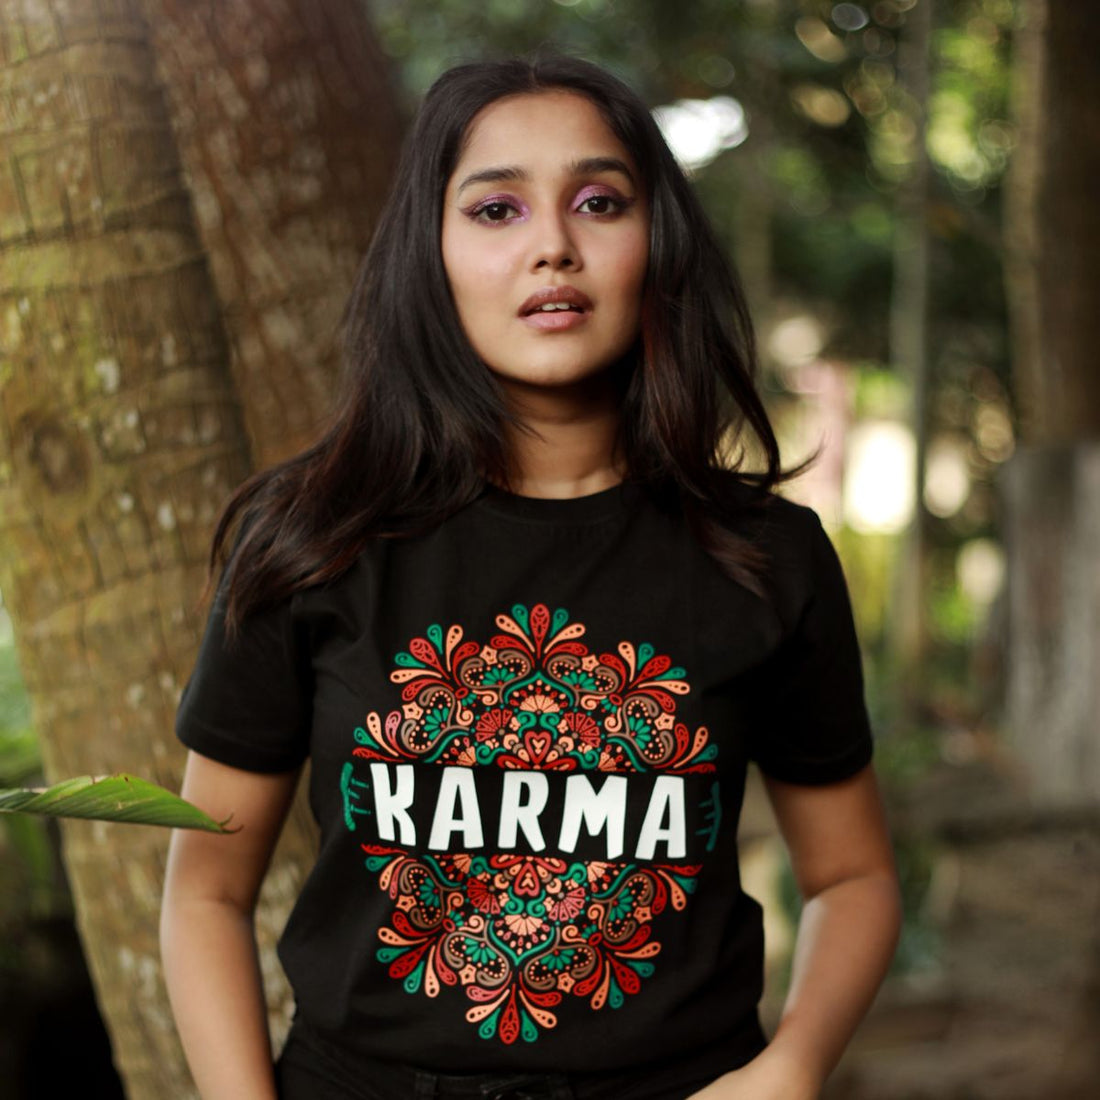 Karma Black T-Shirt for Women